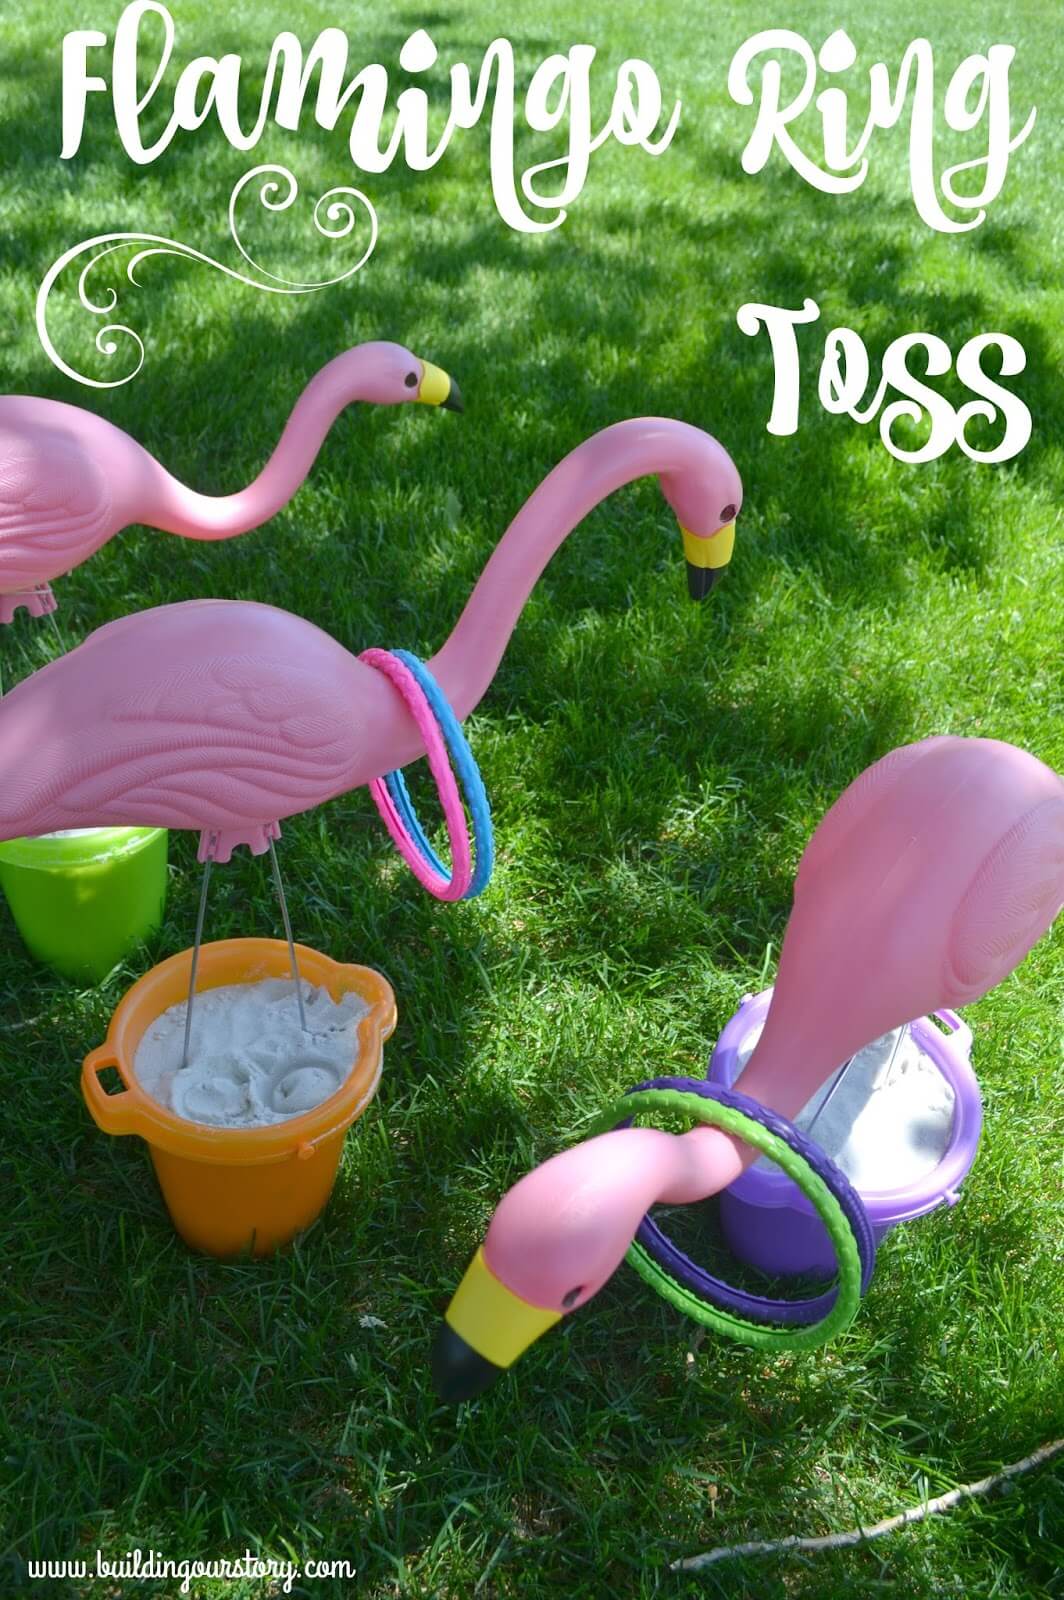 Creative Flamingo Lawn Ornament Ring Toss